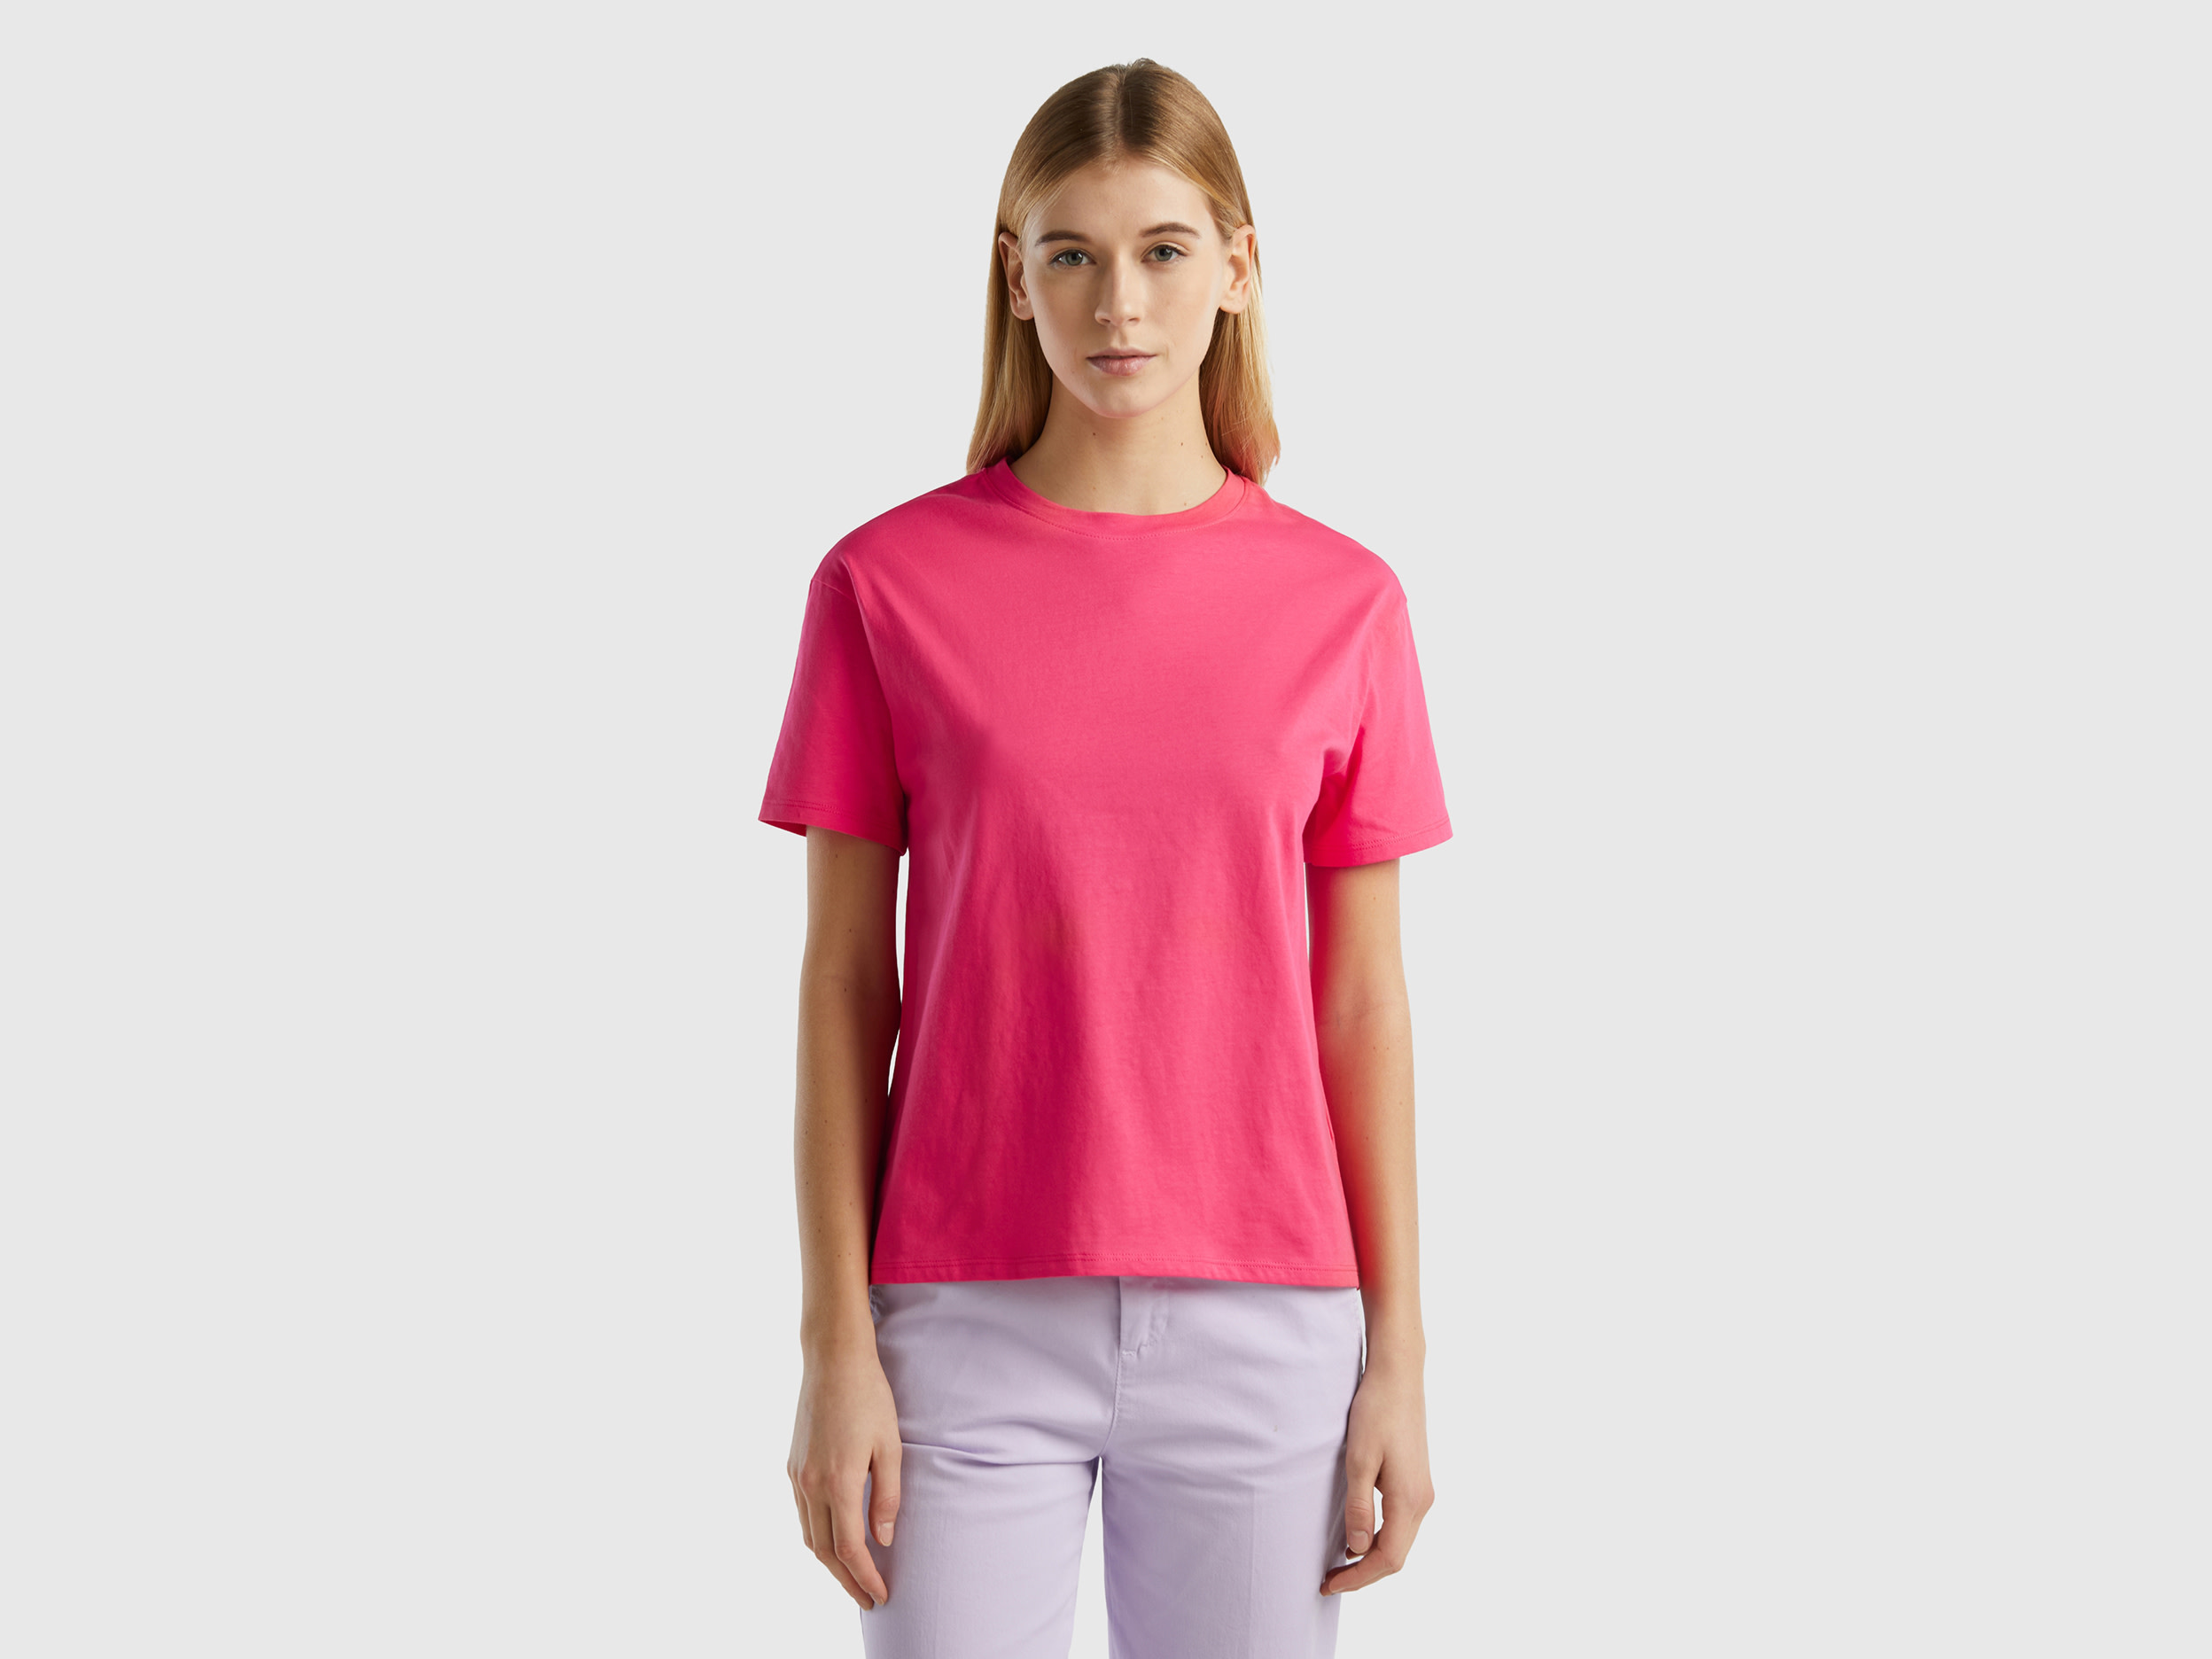 Benetton, Short Sleeve 100% Cotton T-shirt, size XL, Fuchsia, Women